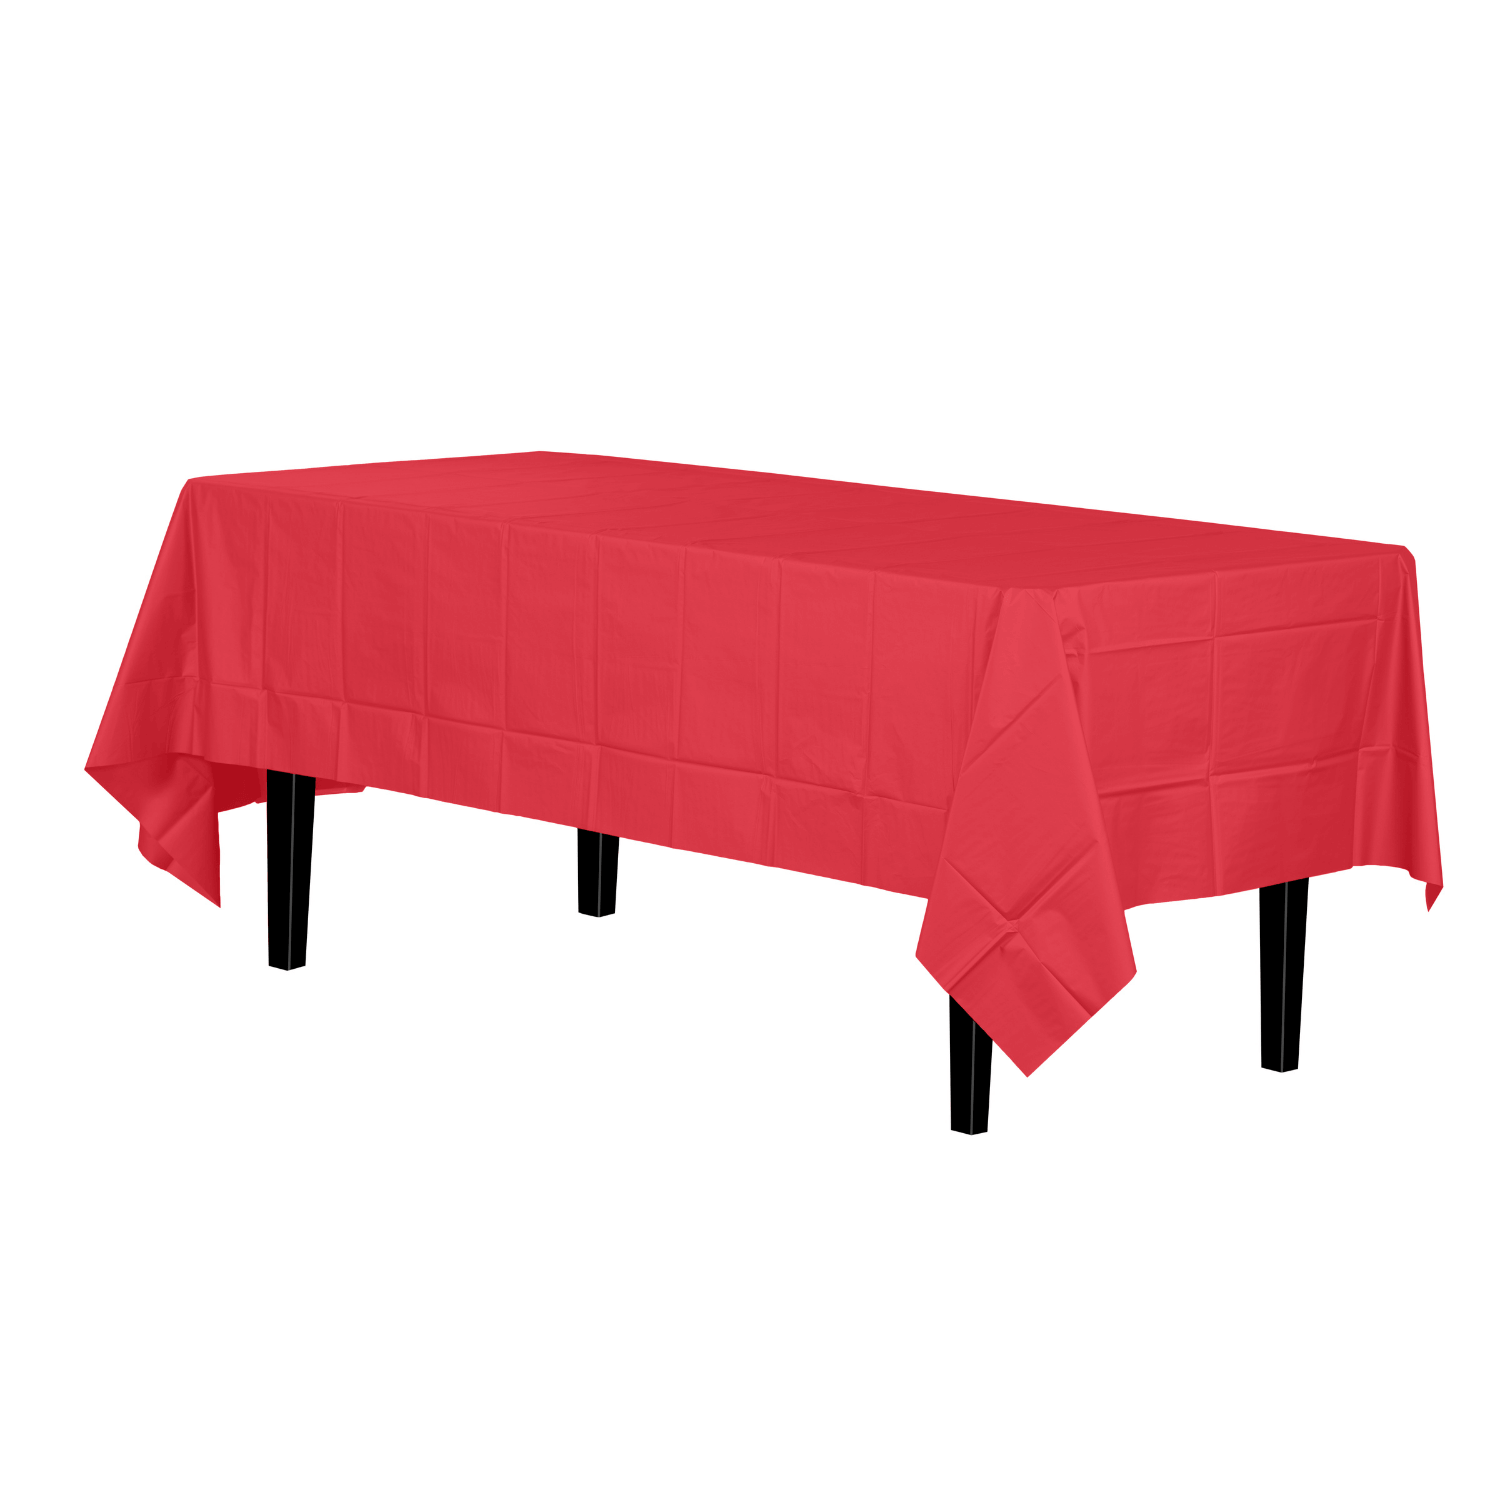 Premium Red Plastic Tablecloth | 96 Count - Yom Tov Settings